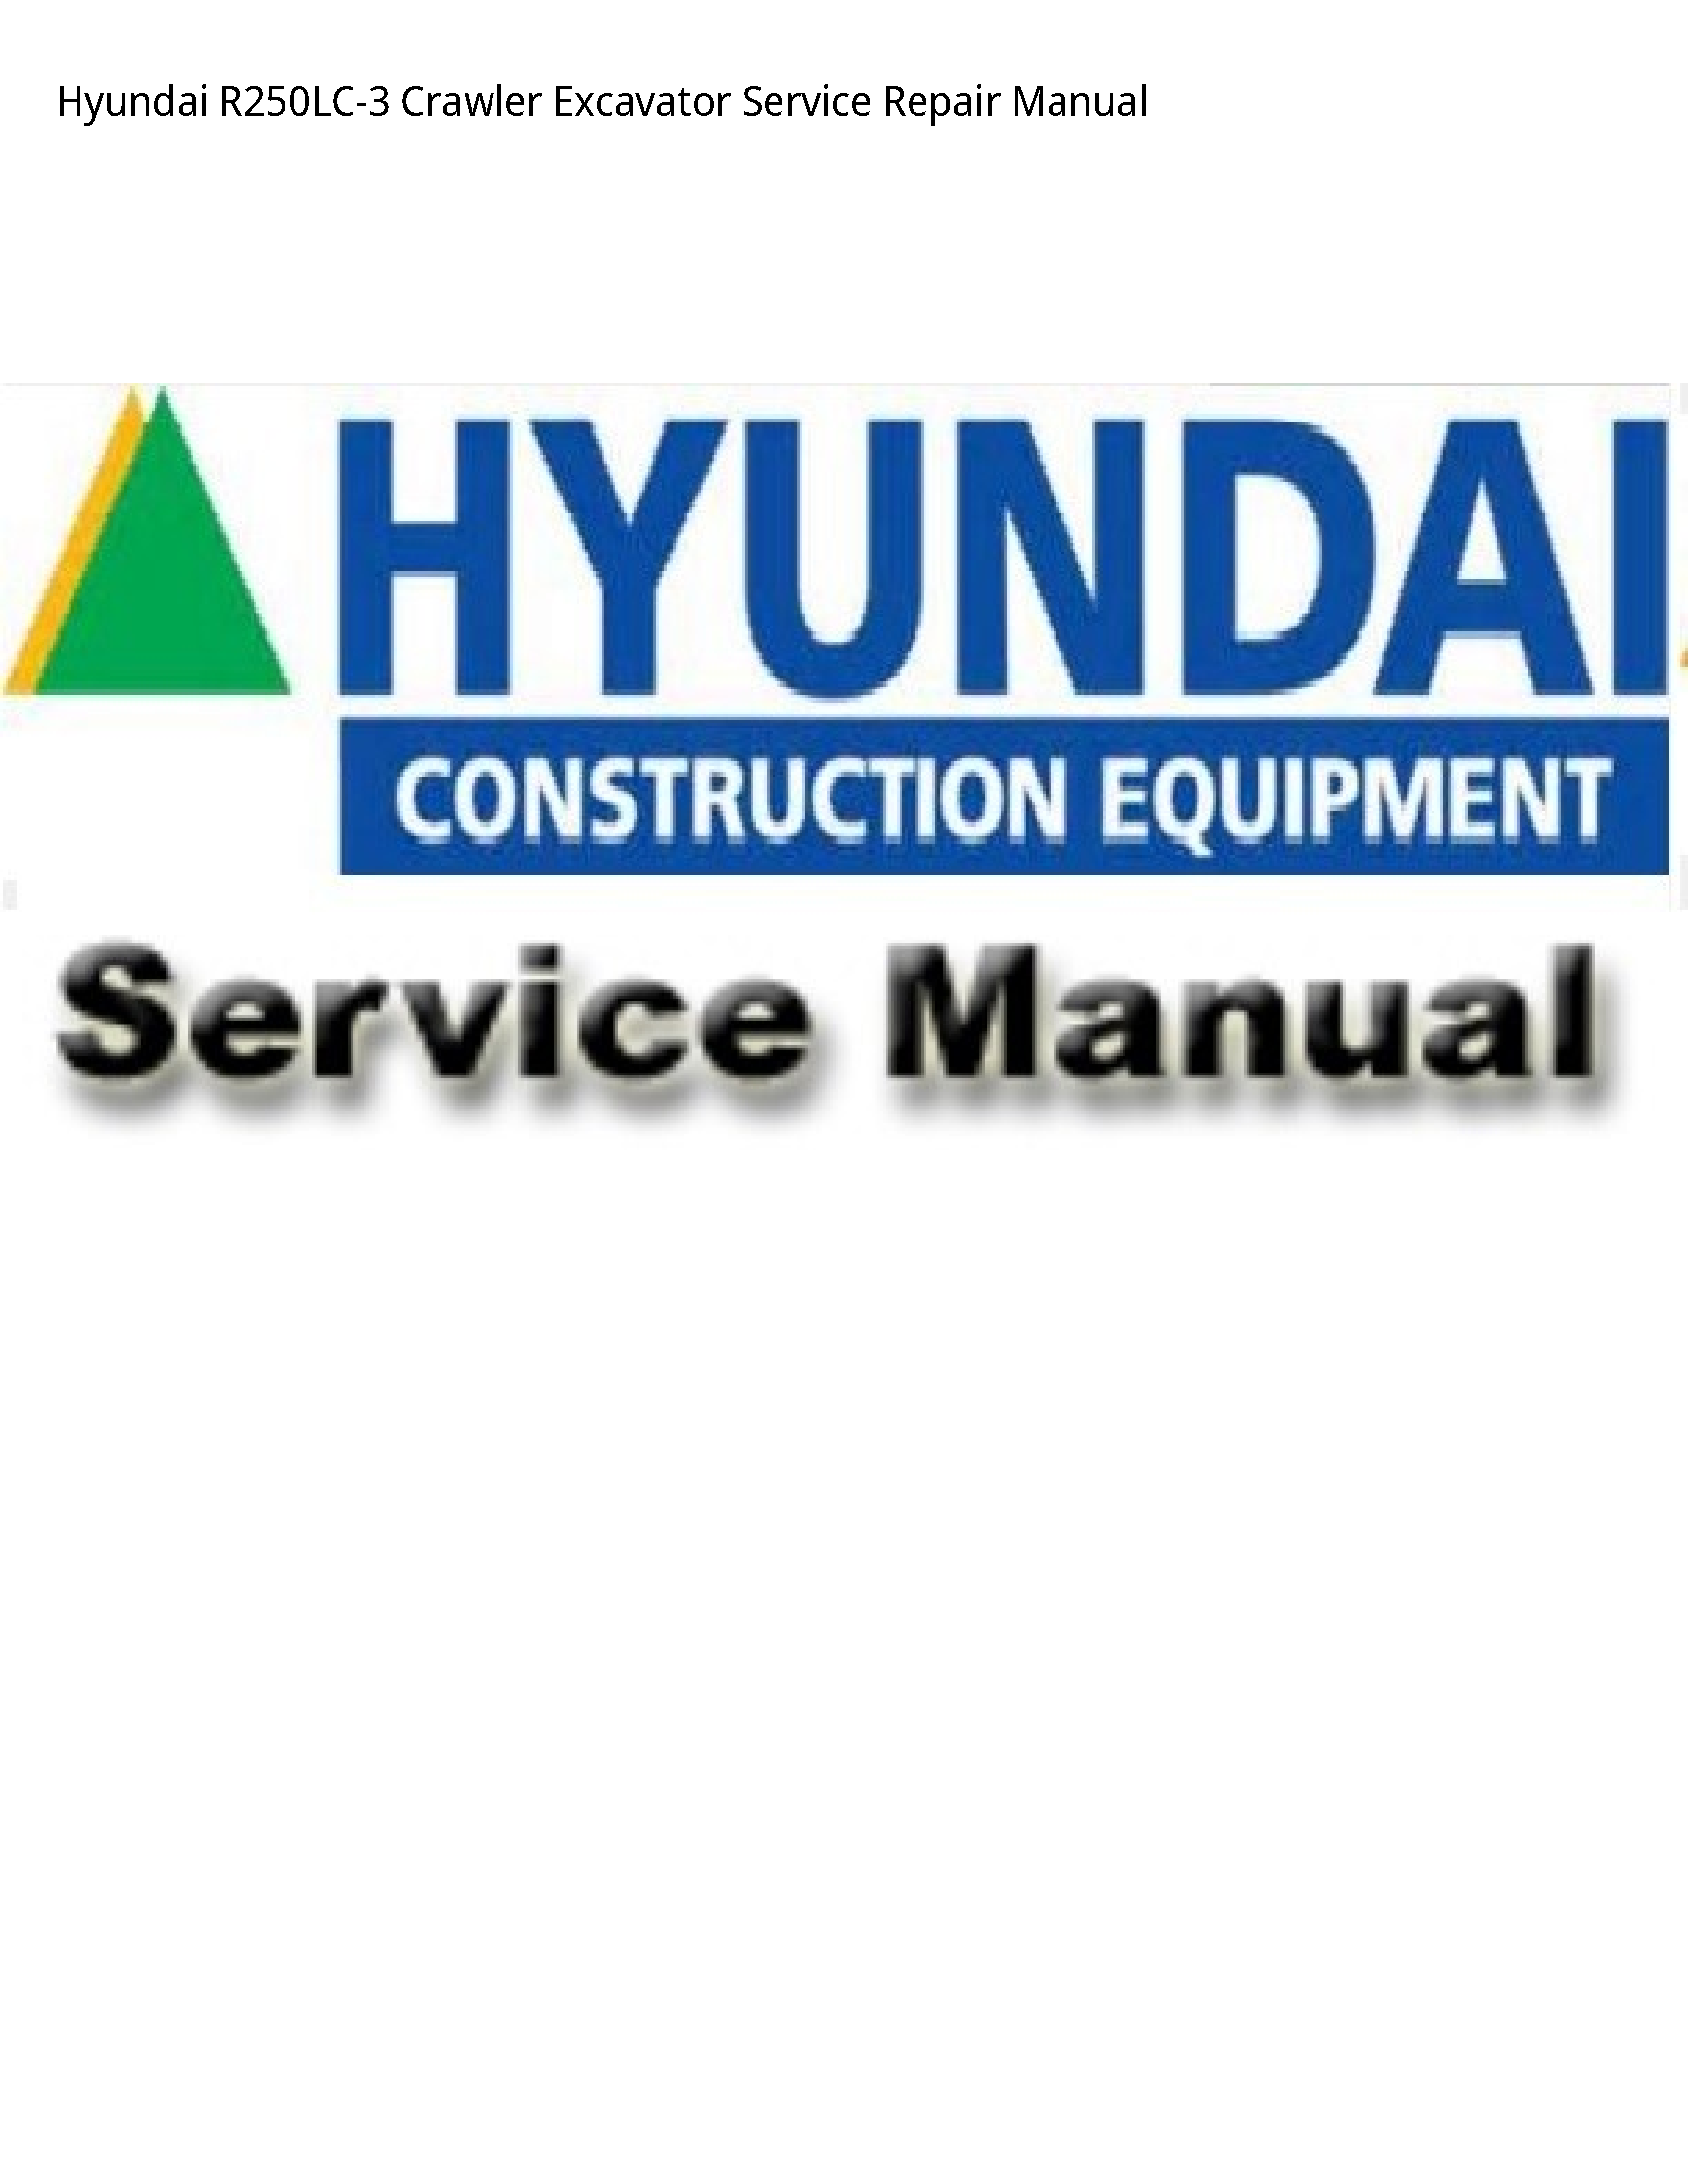 Hyundai R250LC-3 Crawler Excavator manual